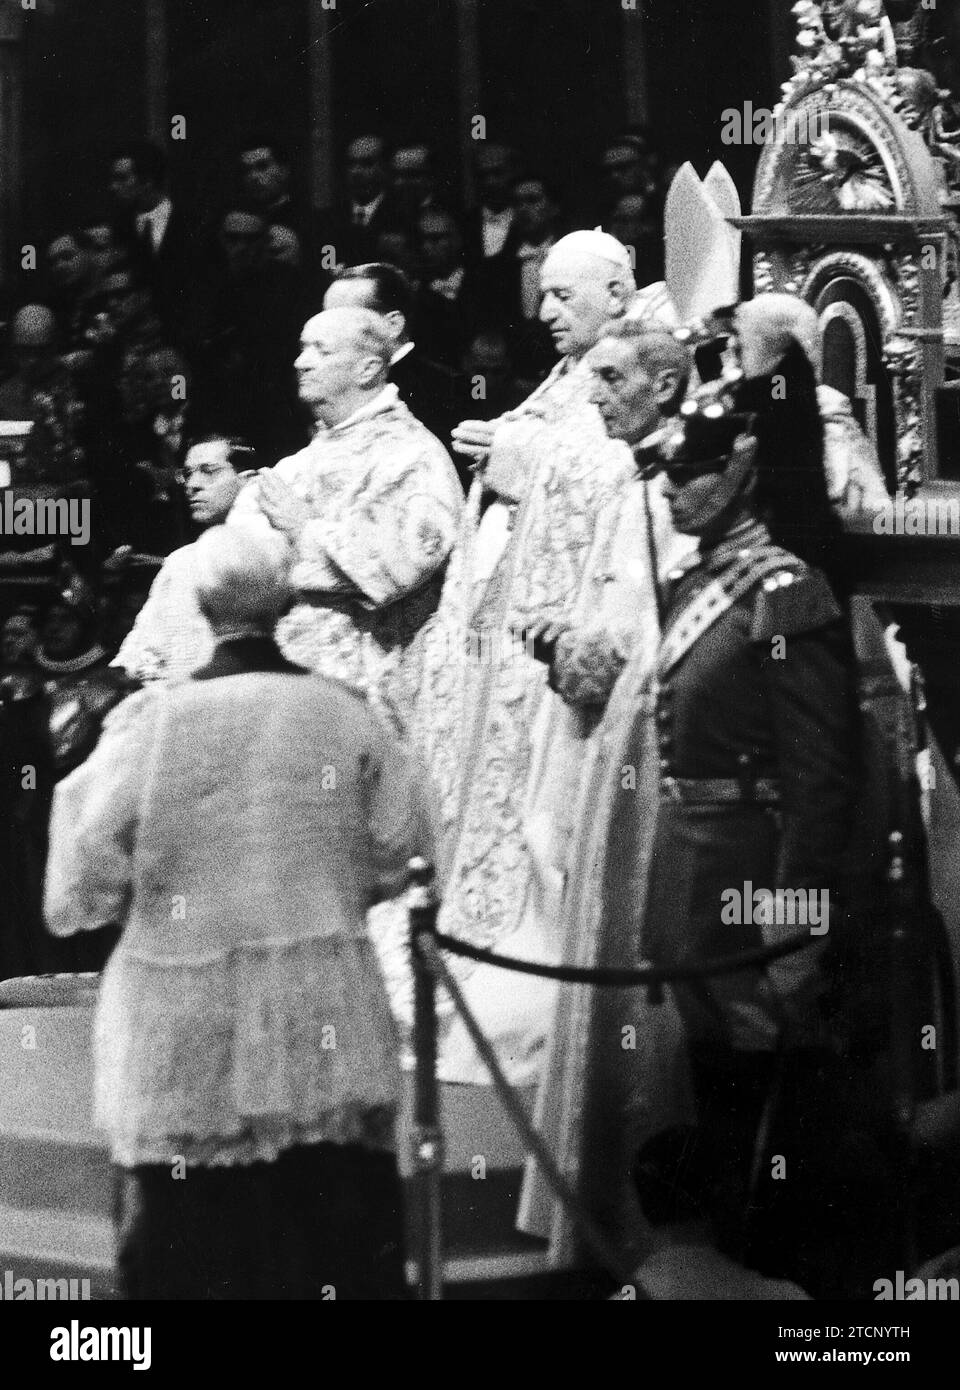 09/30/1962. John XXIII during the Second Vatican Council. Credit: Album / Archivo ABC / Torremocha Stock Photo